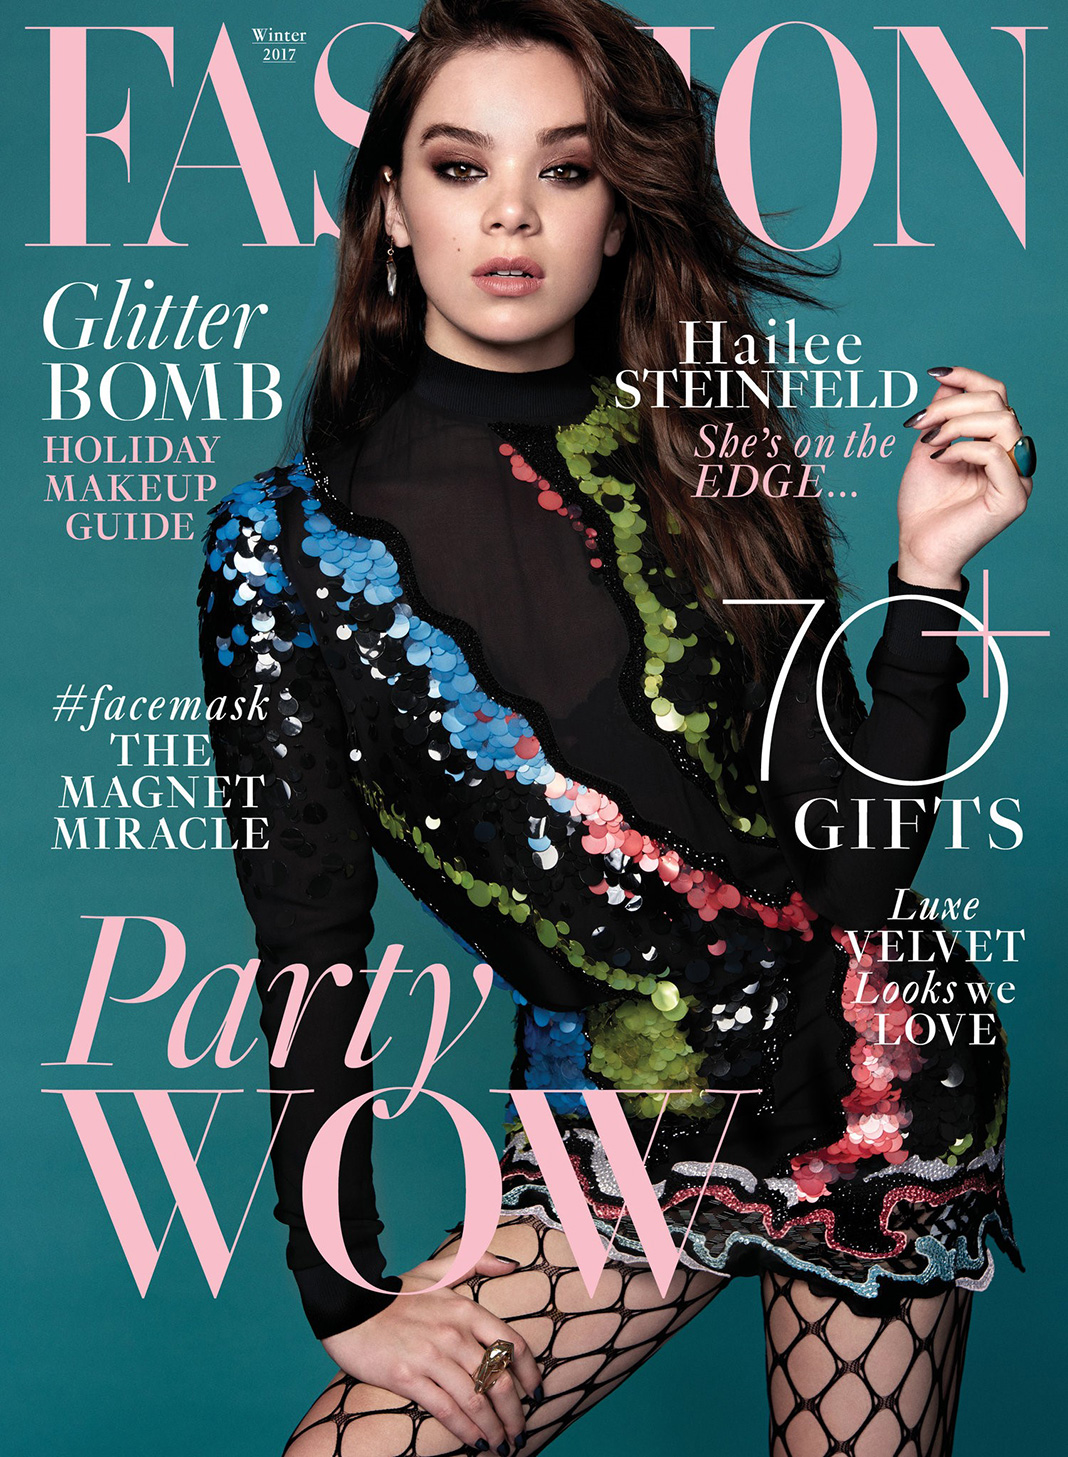 Хейли Стайнфелд на обложке журнала Fashion, 2017 г.